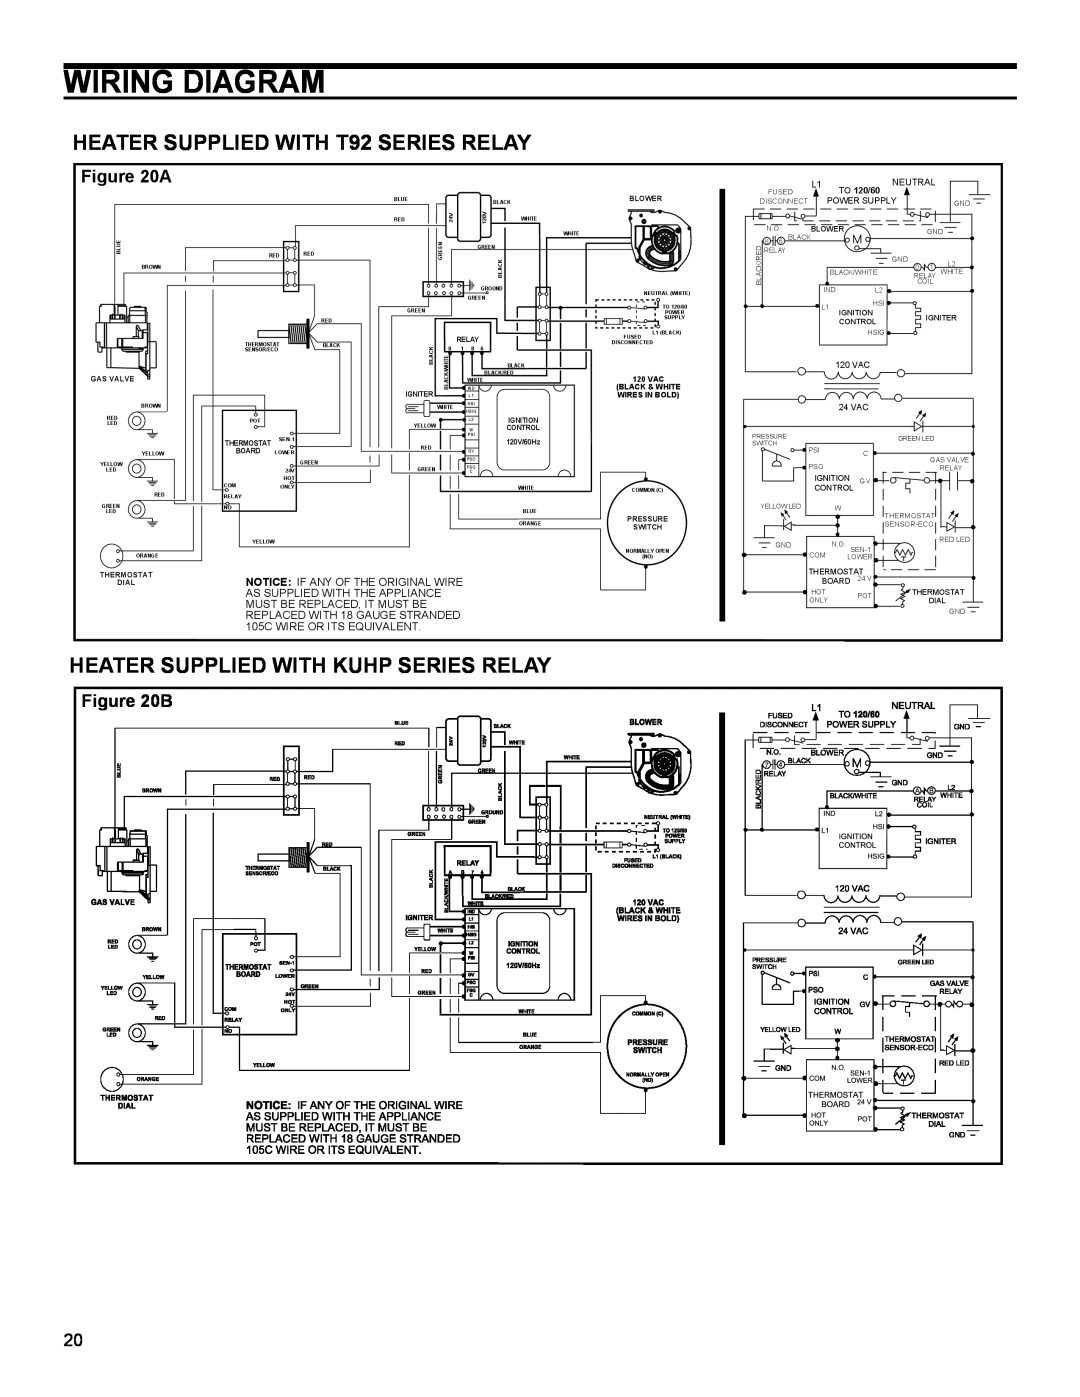 Polaris PC 150-50 2NV Wiring Diagram, HEATER SUPPLIED WITH T92 SERIES RELAY, Heater Supplied With Kuhp Series Relay 